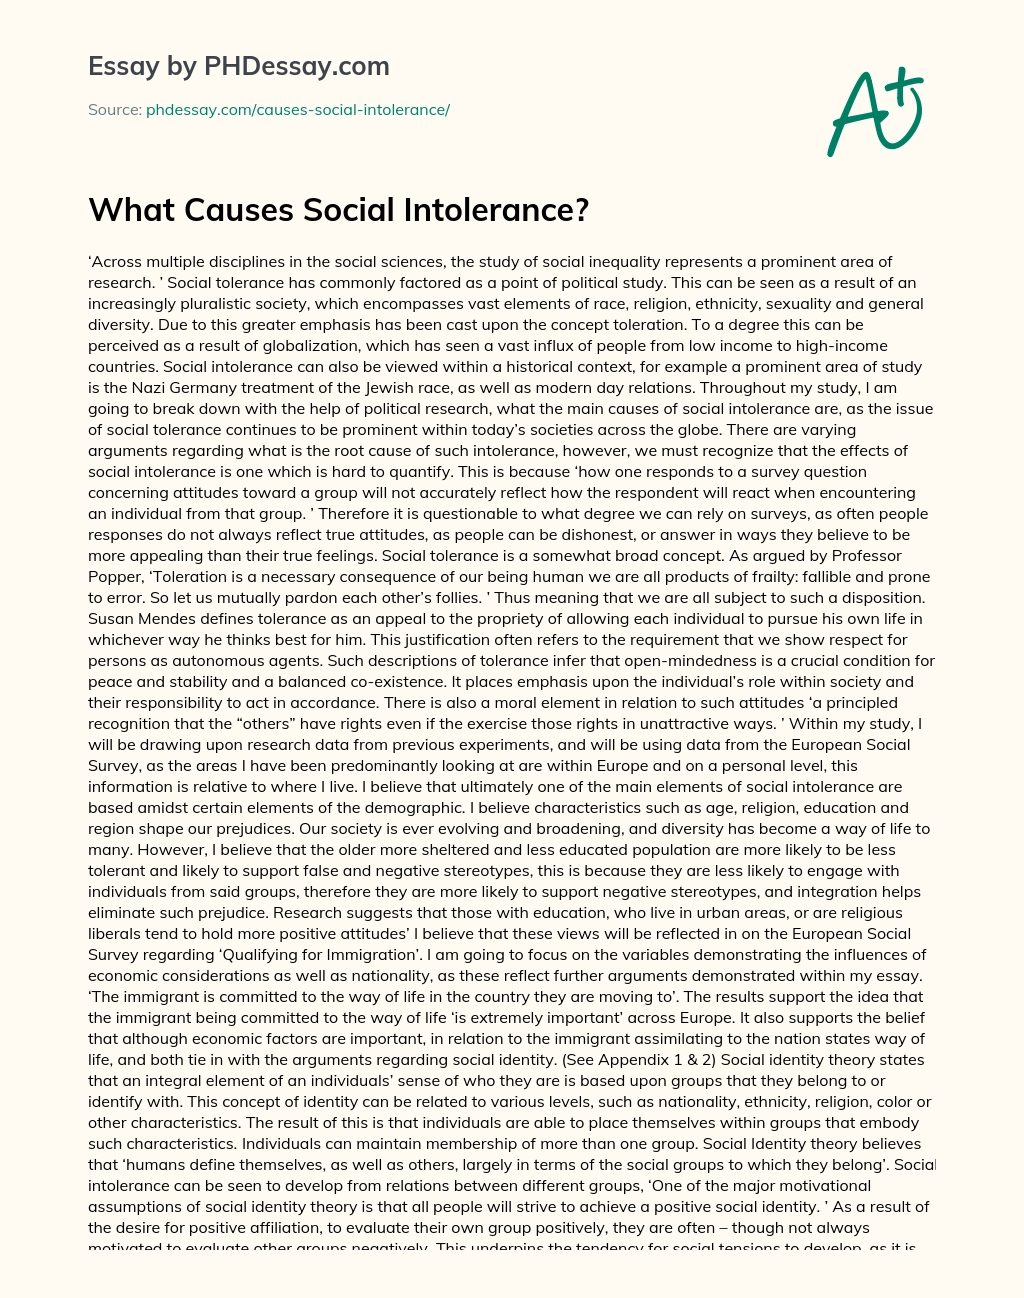 tolerance in society essay